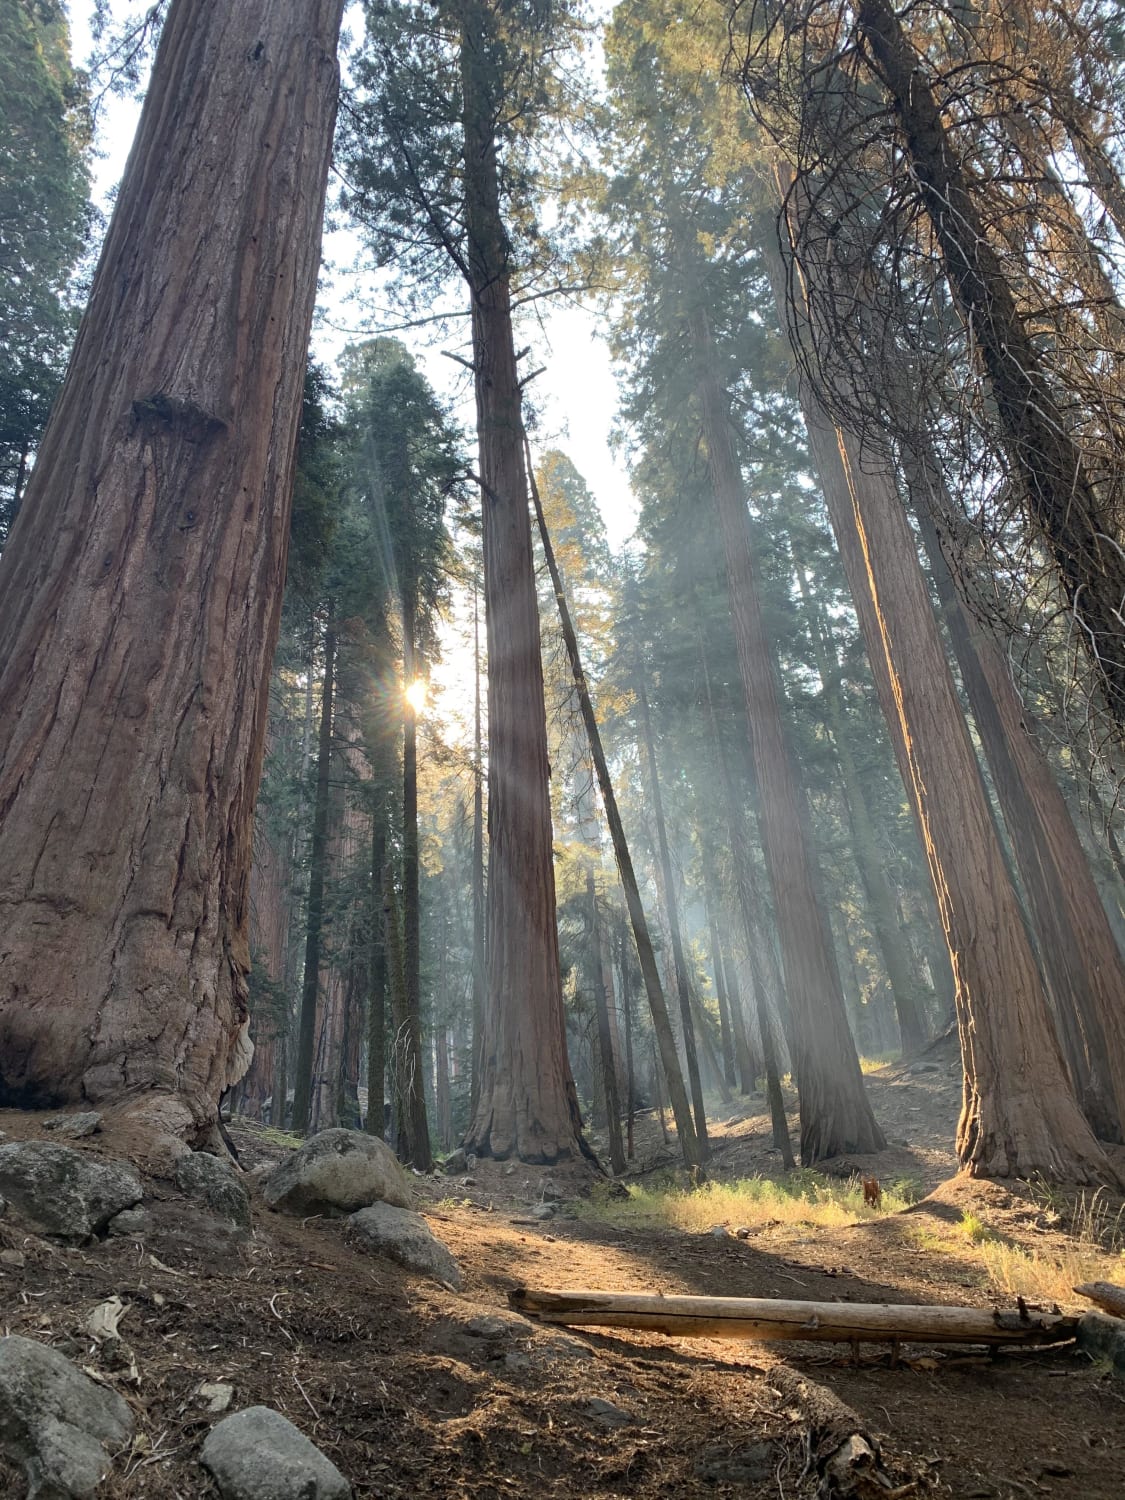 So glad I got to walk amongst the giants! Congress Trail, Sequoia National Park, California, USA.